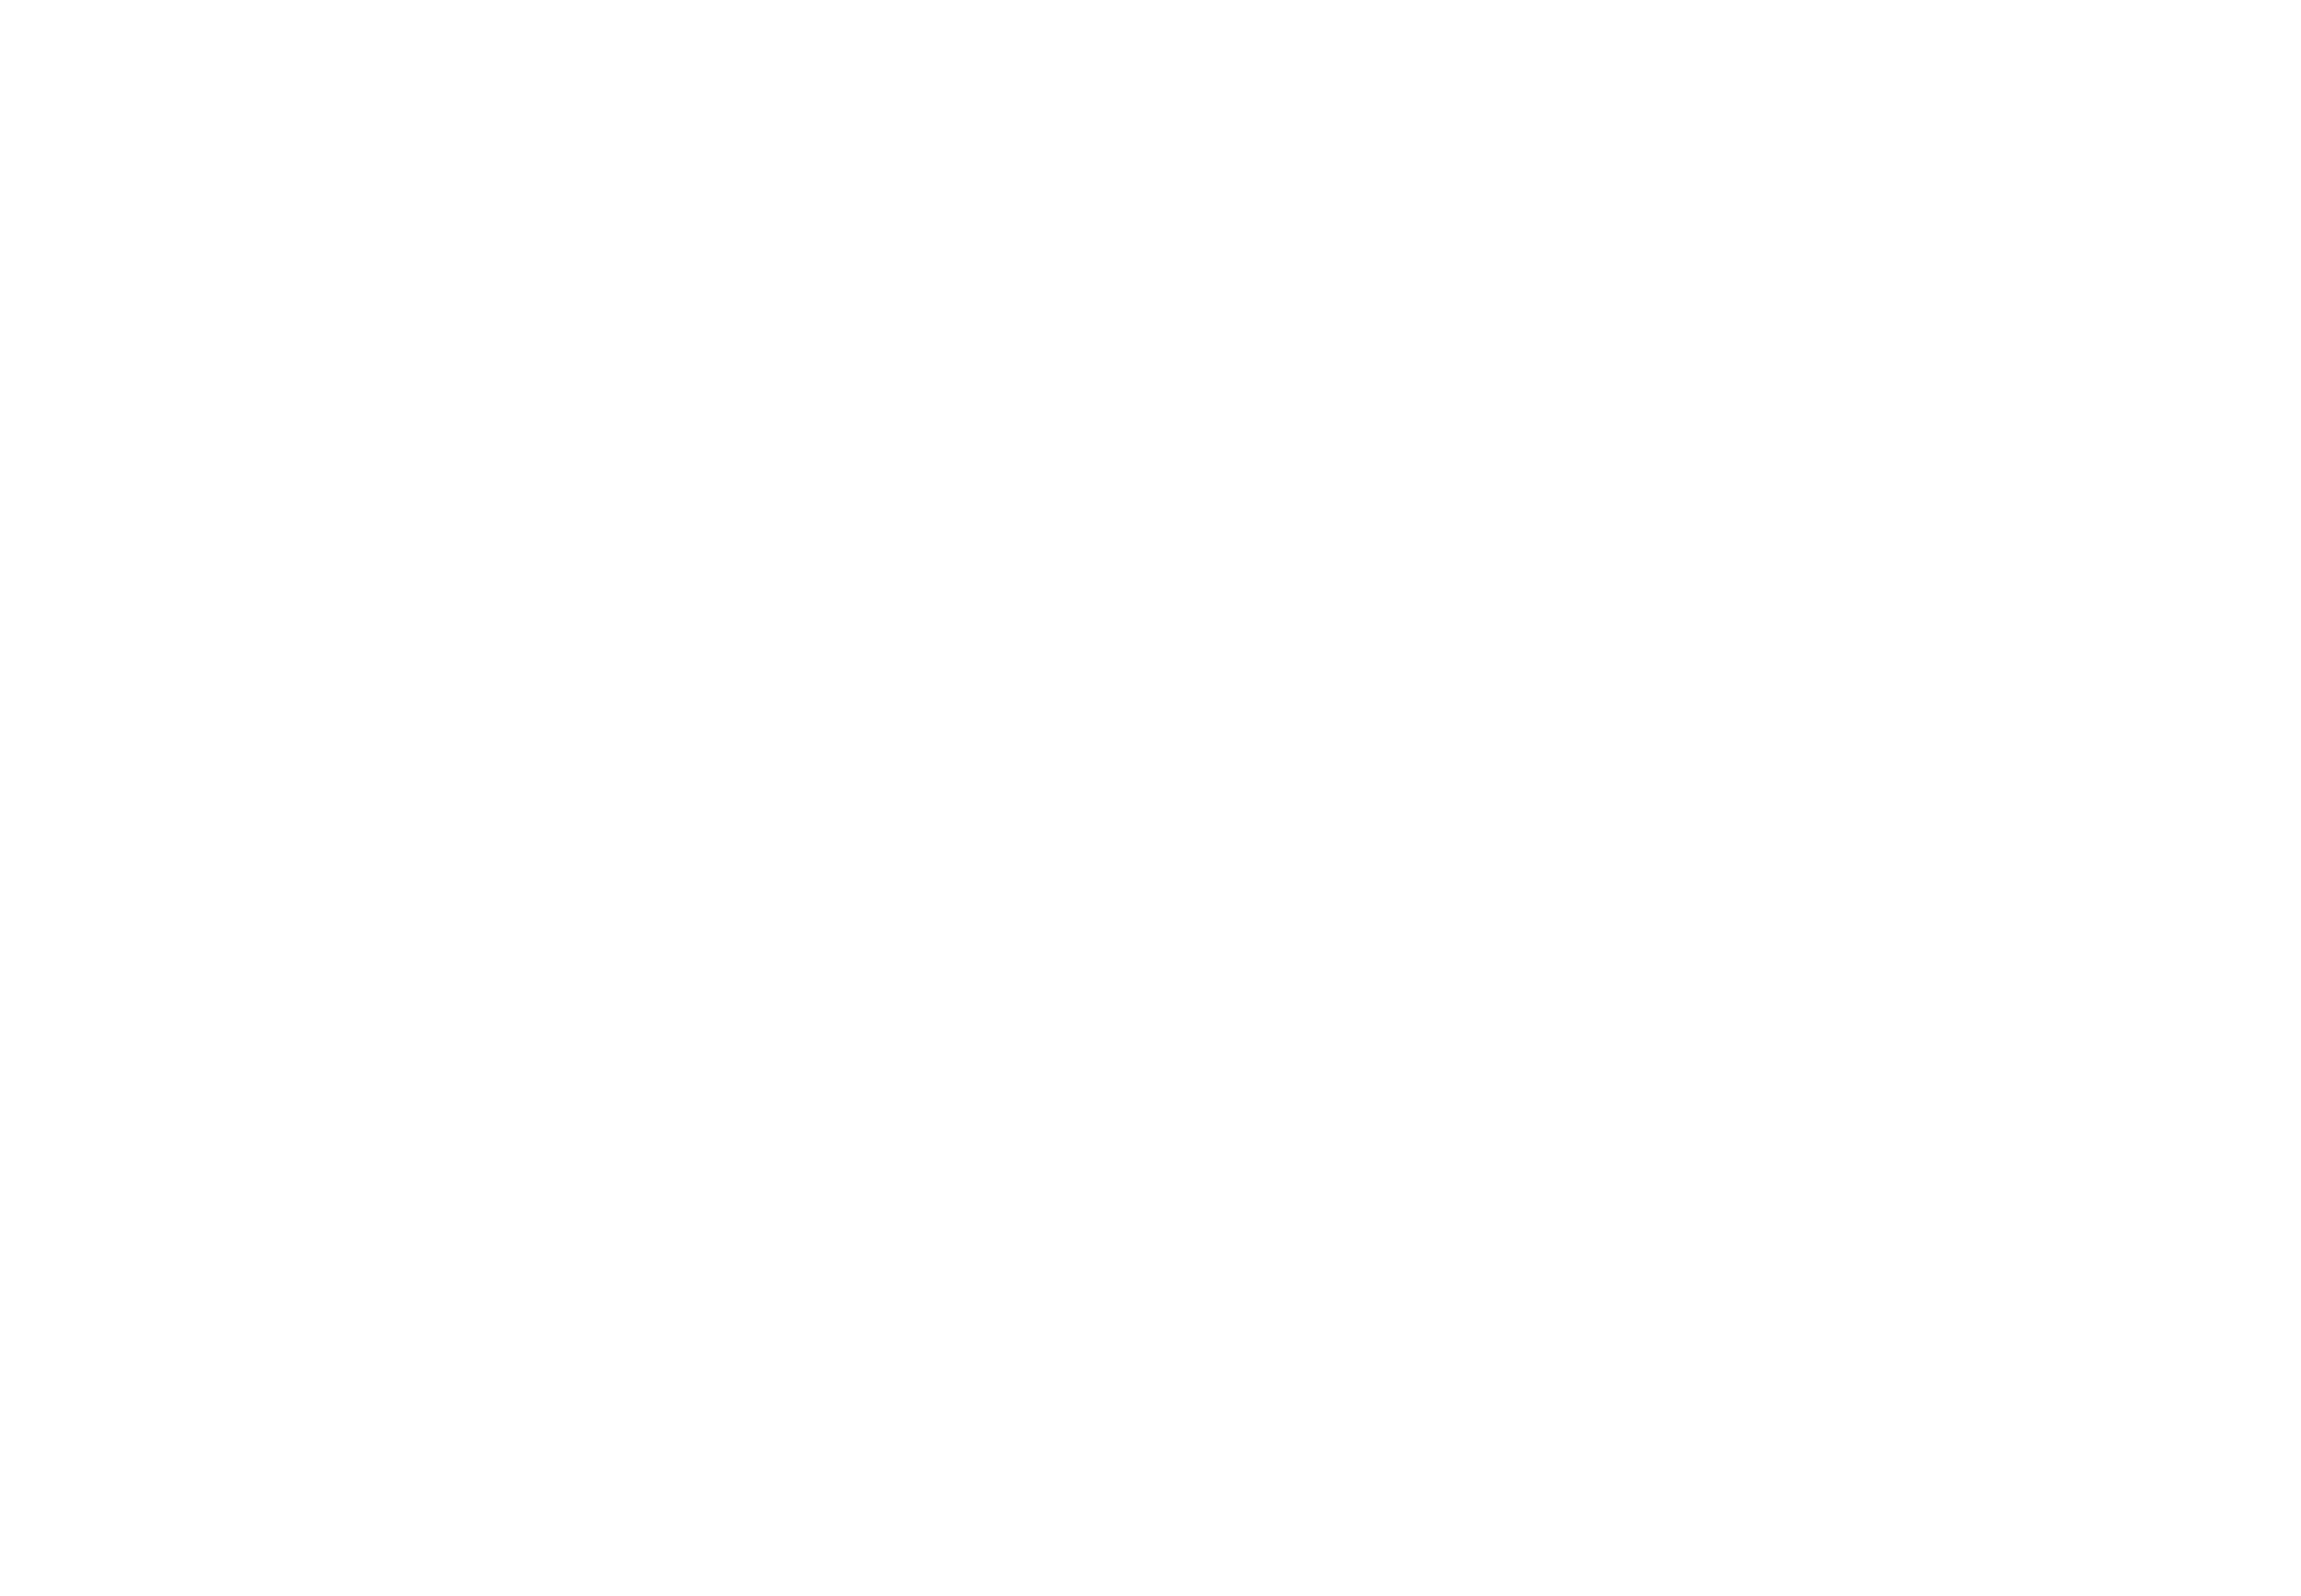 Village of Fayetteville